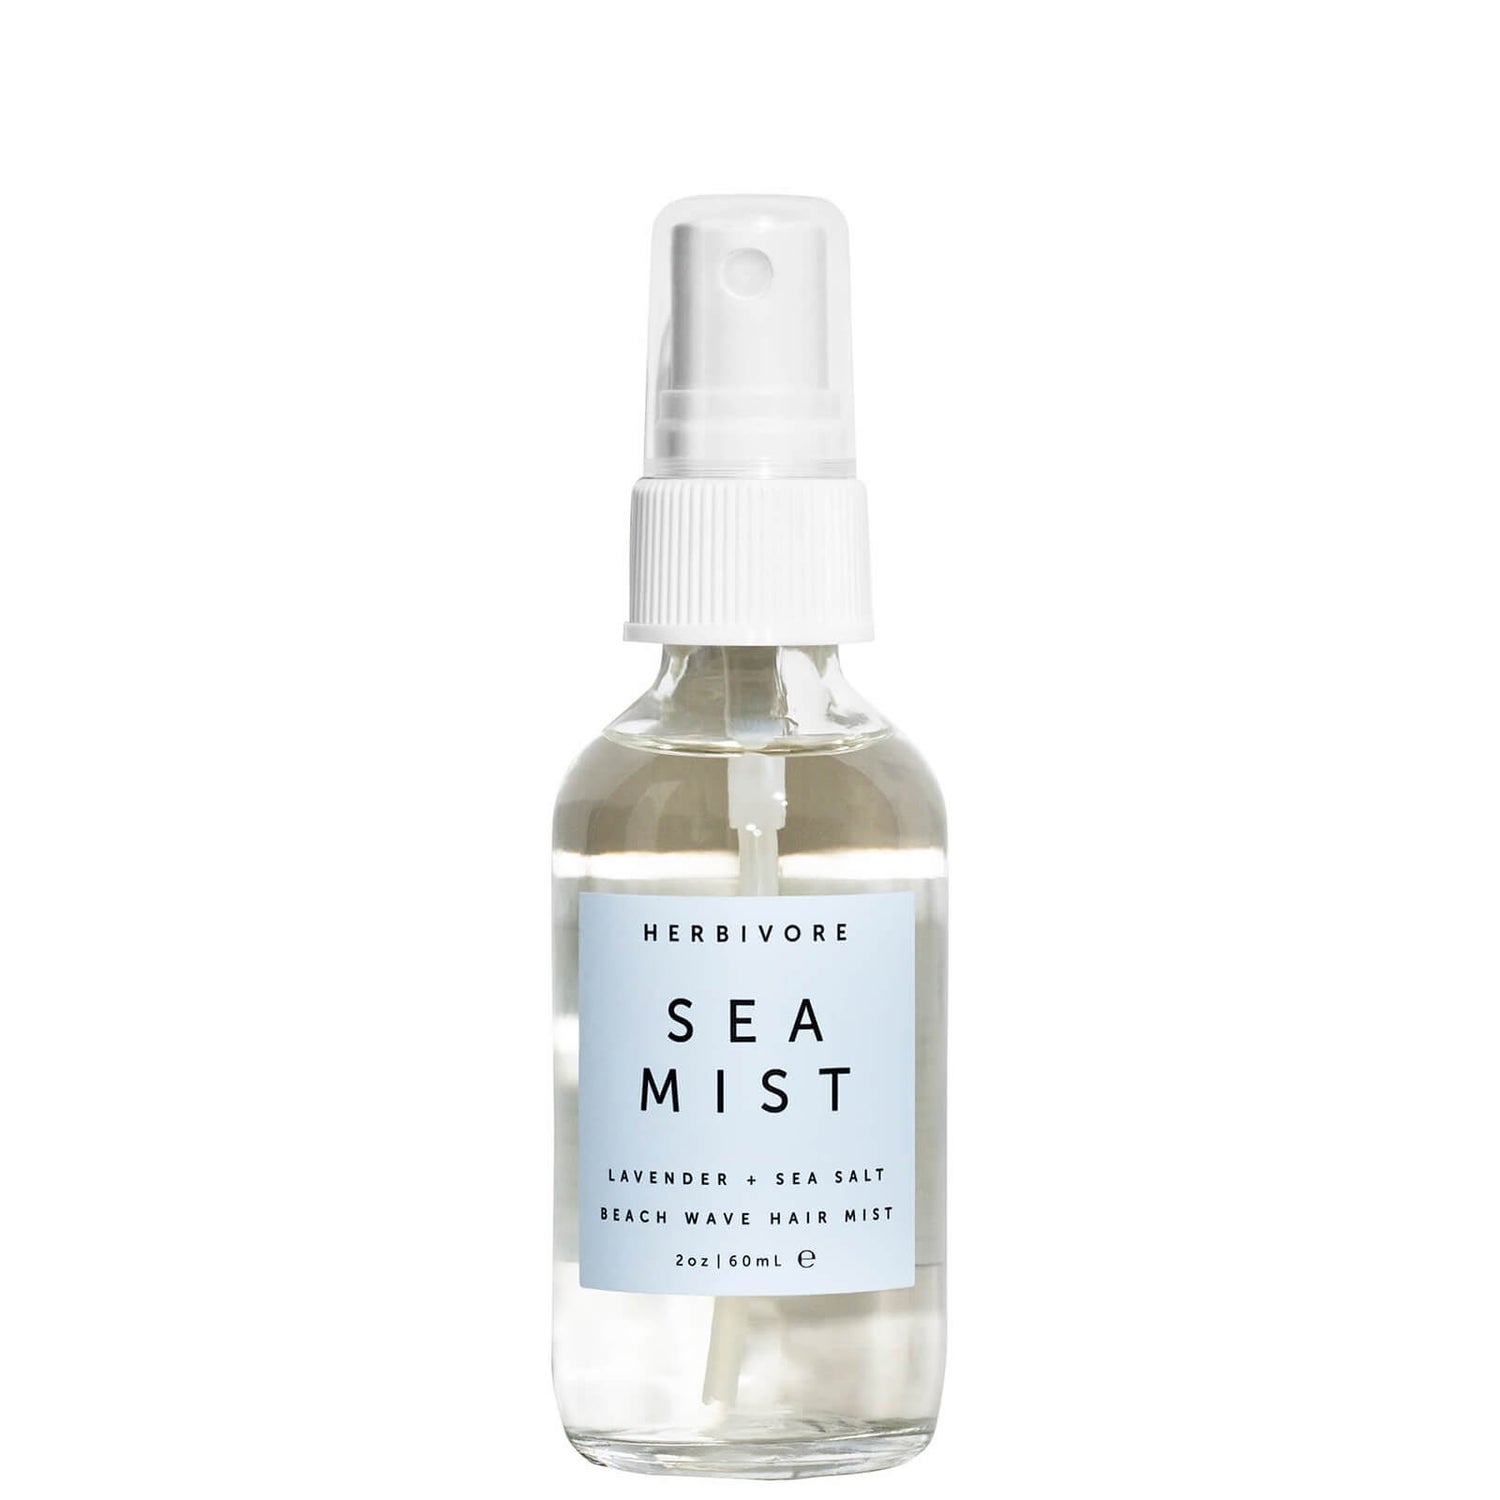 Herbivore Sea Mist Lavender and Sea Salt Beach Wave Hair Mist 60ml